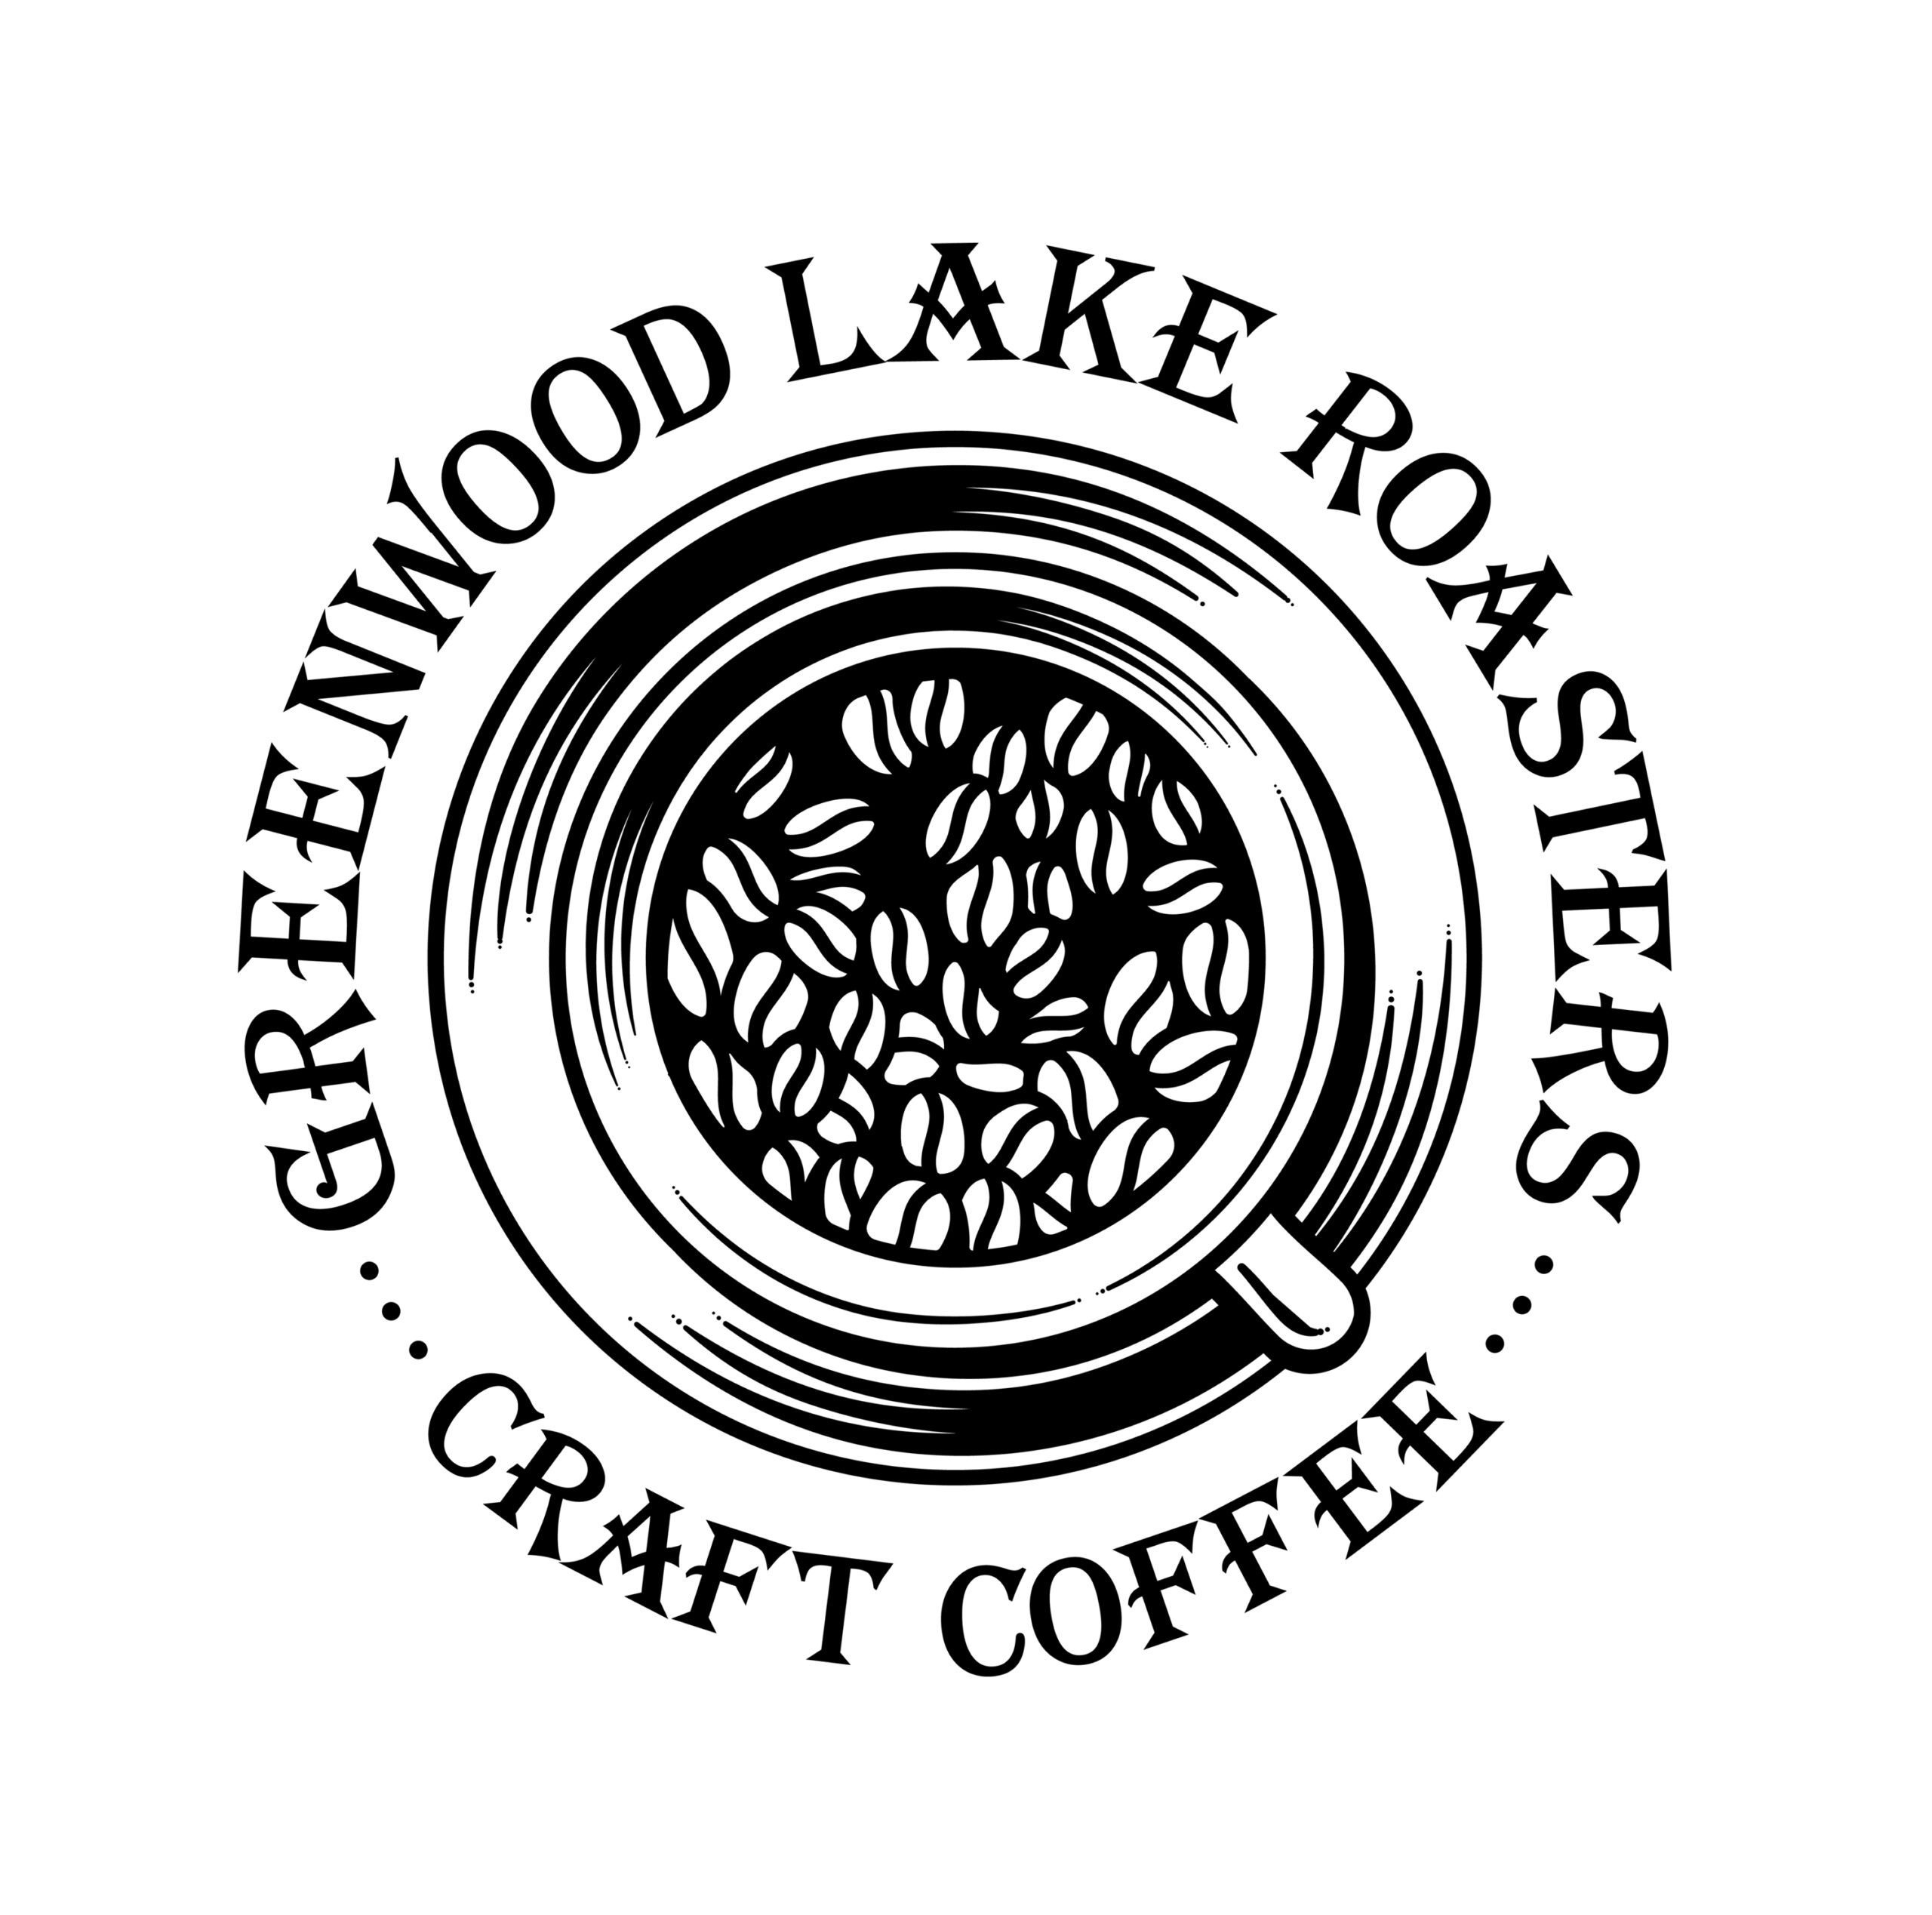 Greenwood Lake Roasters